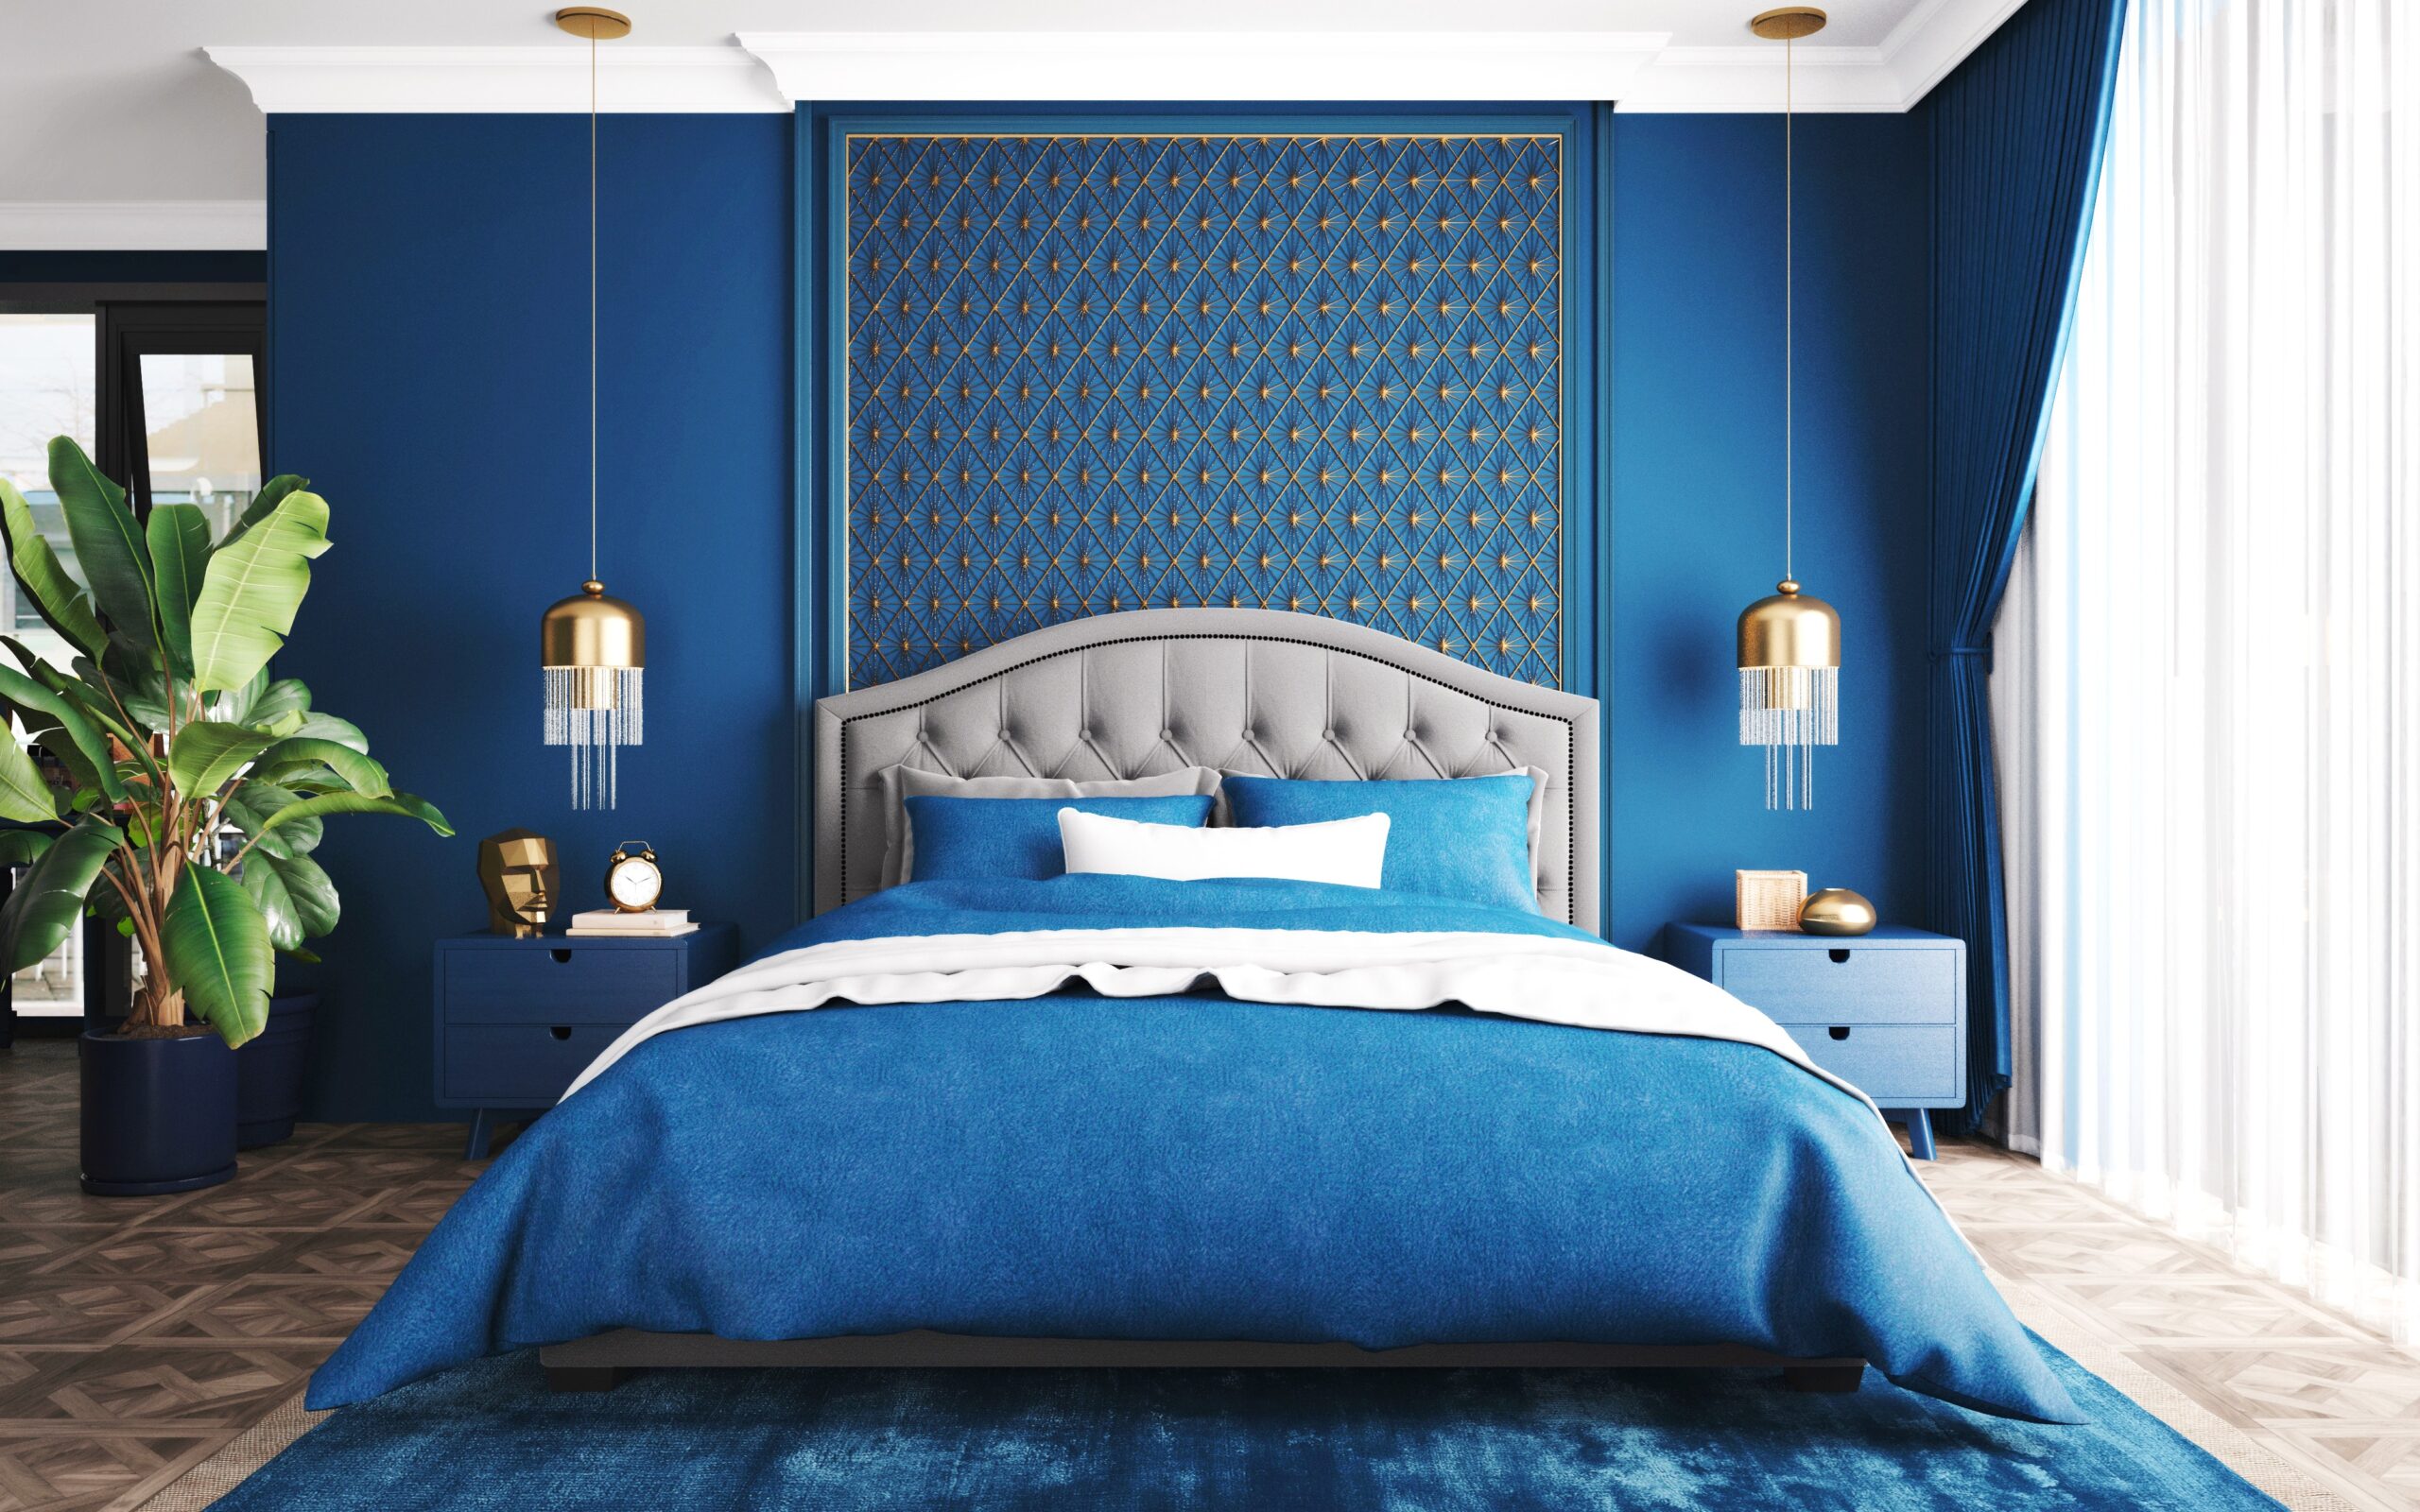 <img src="blue.jpg" alt="blue bedroom best anti-snoring hacks"/>